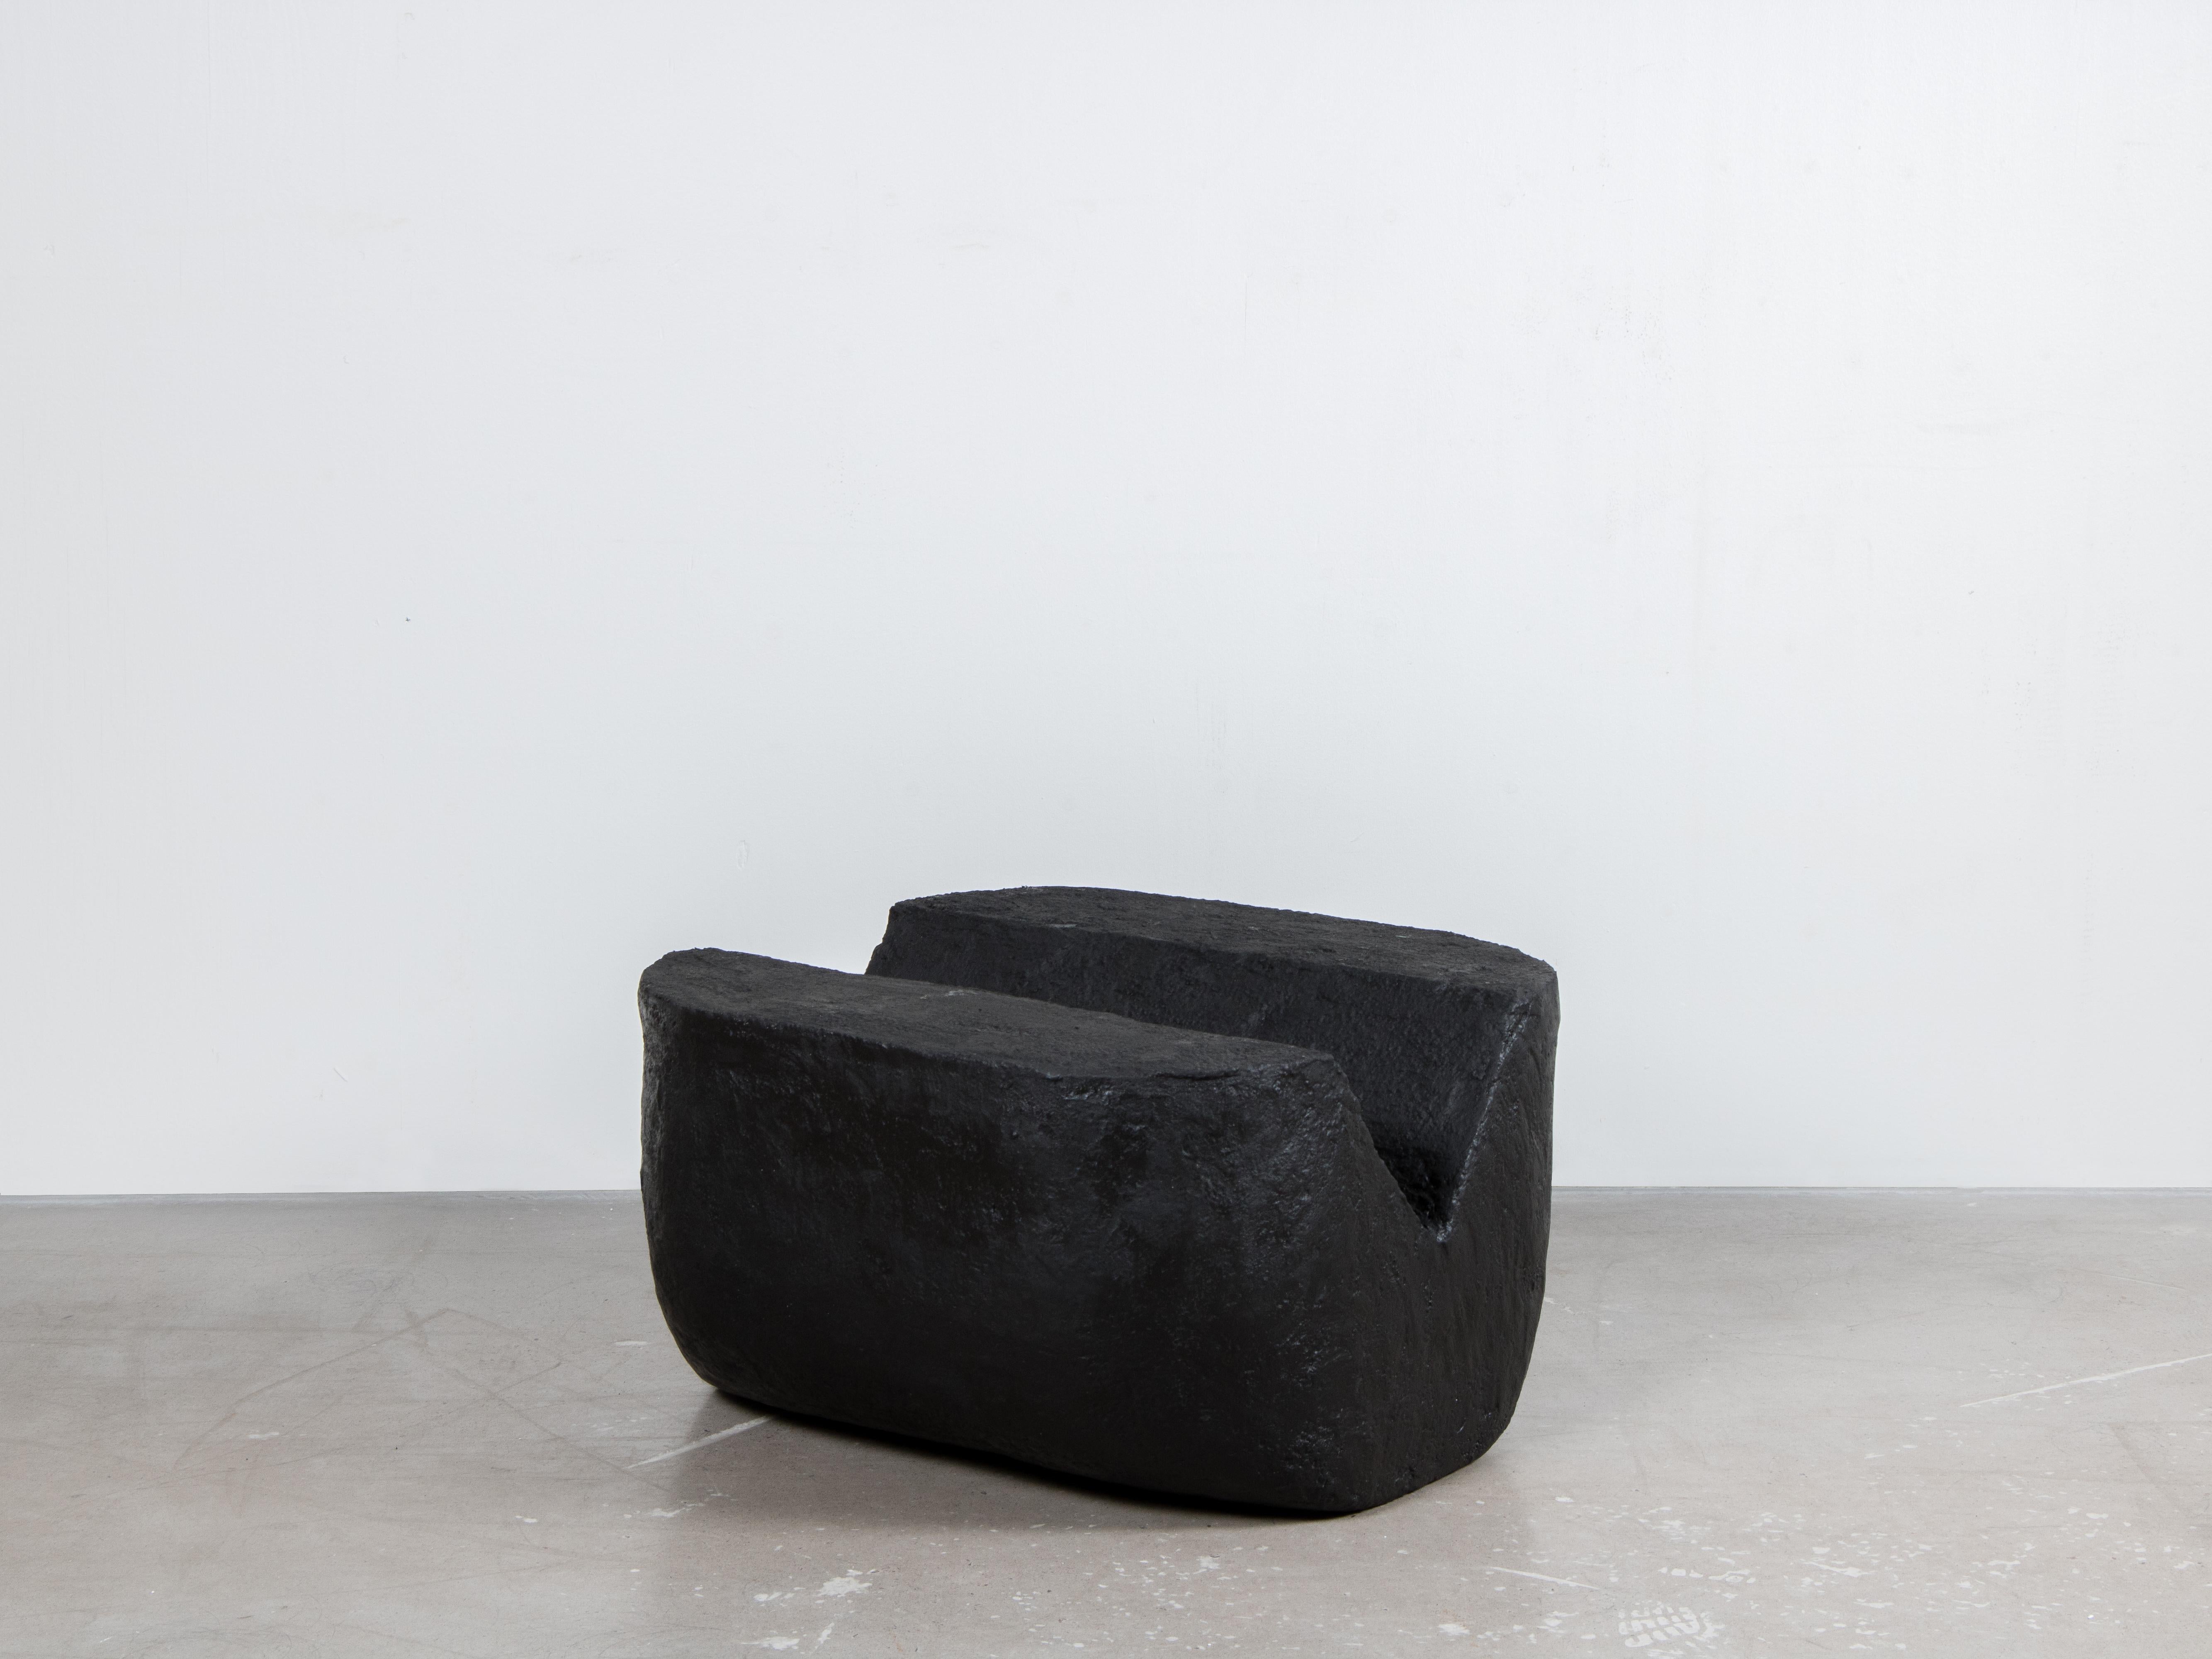 Modern Contemporary Black Stool / Side Table in Concrete, Sten Stool by Lucas Morten For Sale